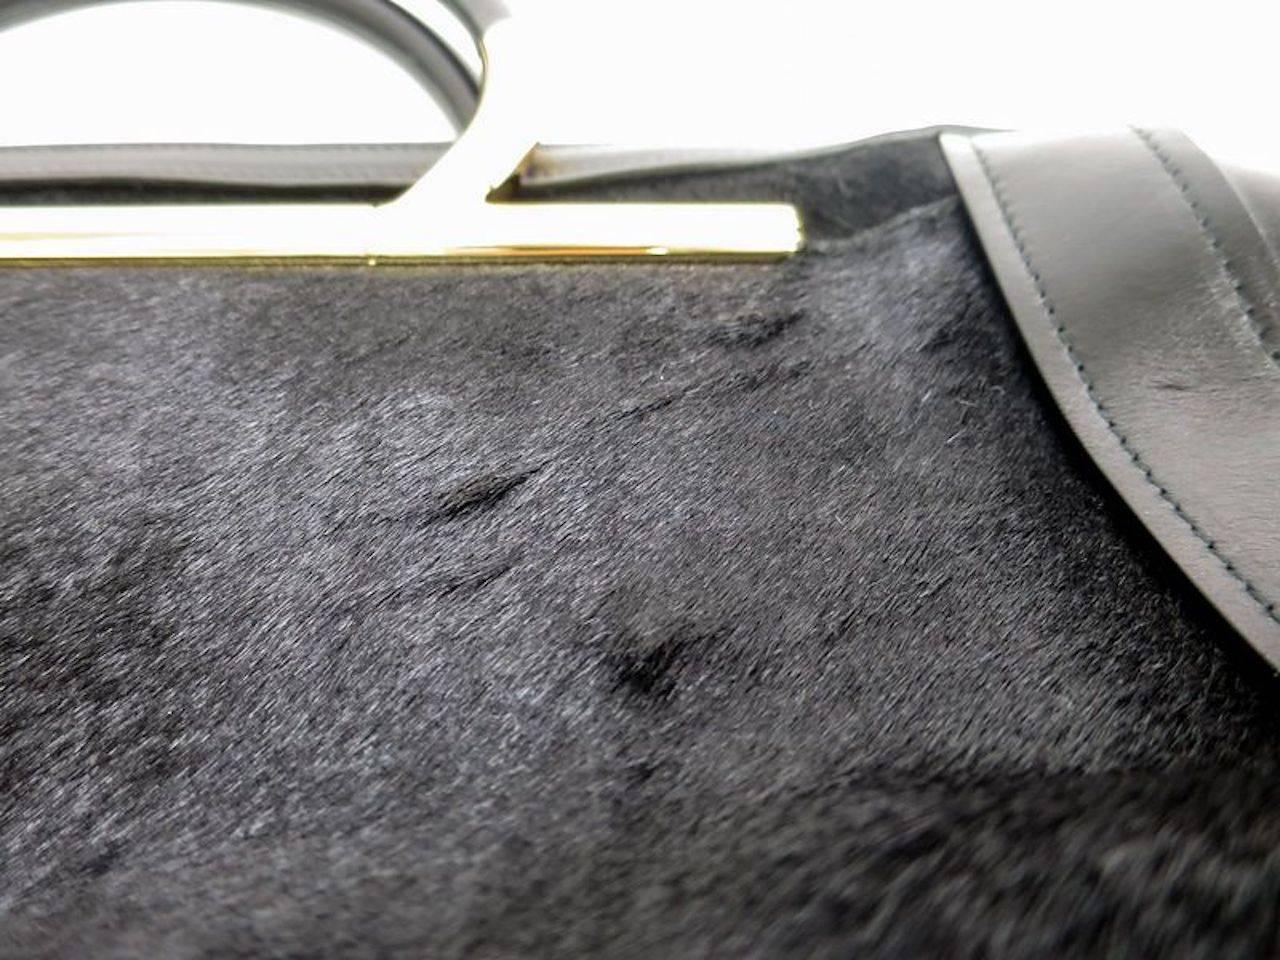 Salvatore Ferragamo Black Leather Gold Evening Top Handle Satchel Bag

Leather
Ponyhair fur
Zipper closure 
Made in Italy
Handle 13